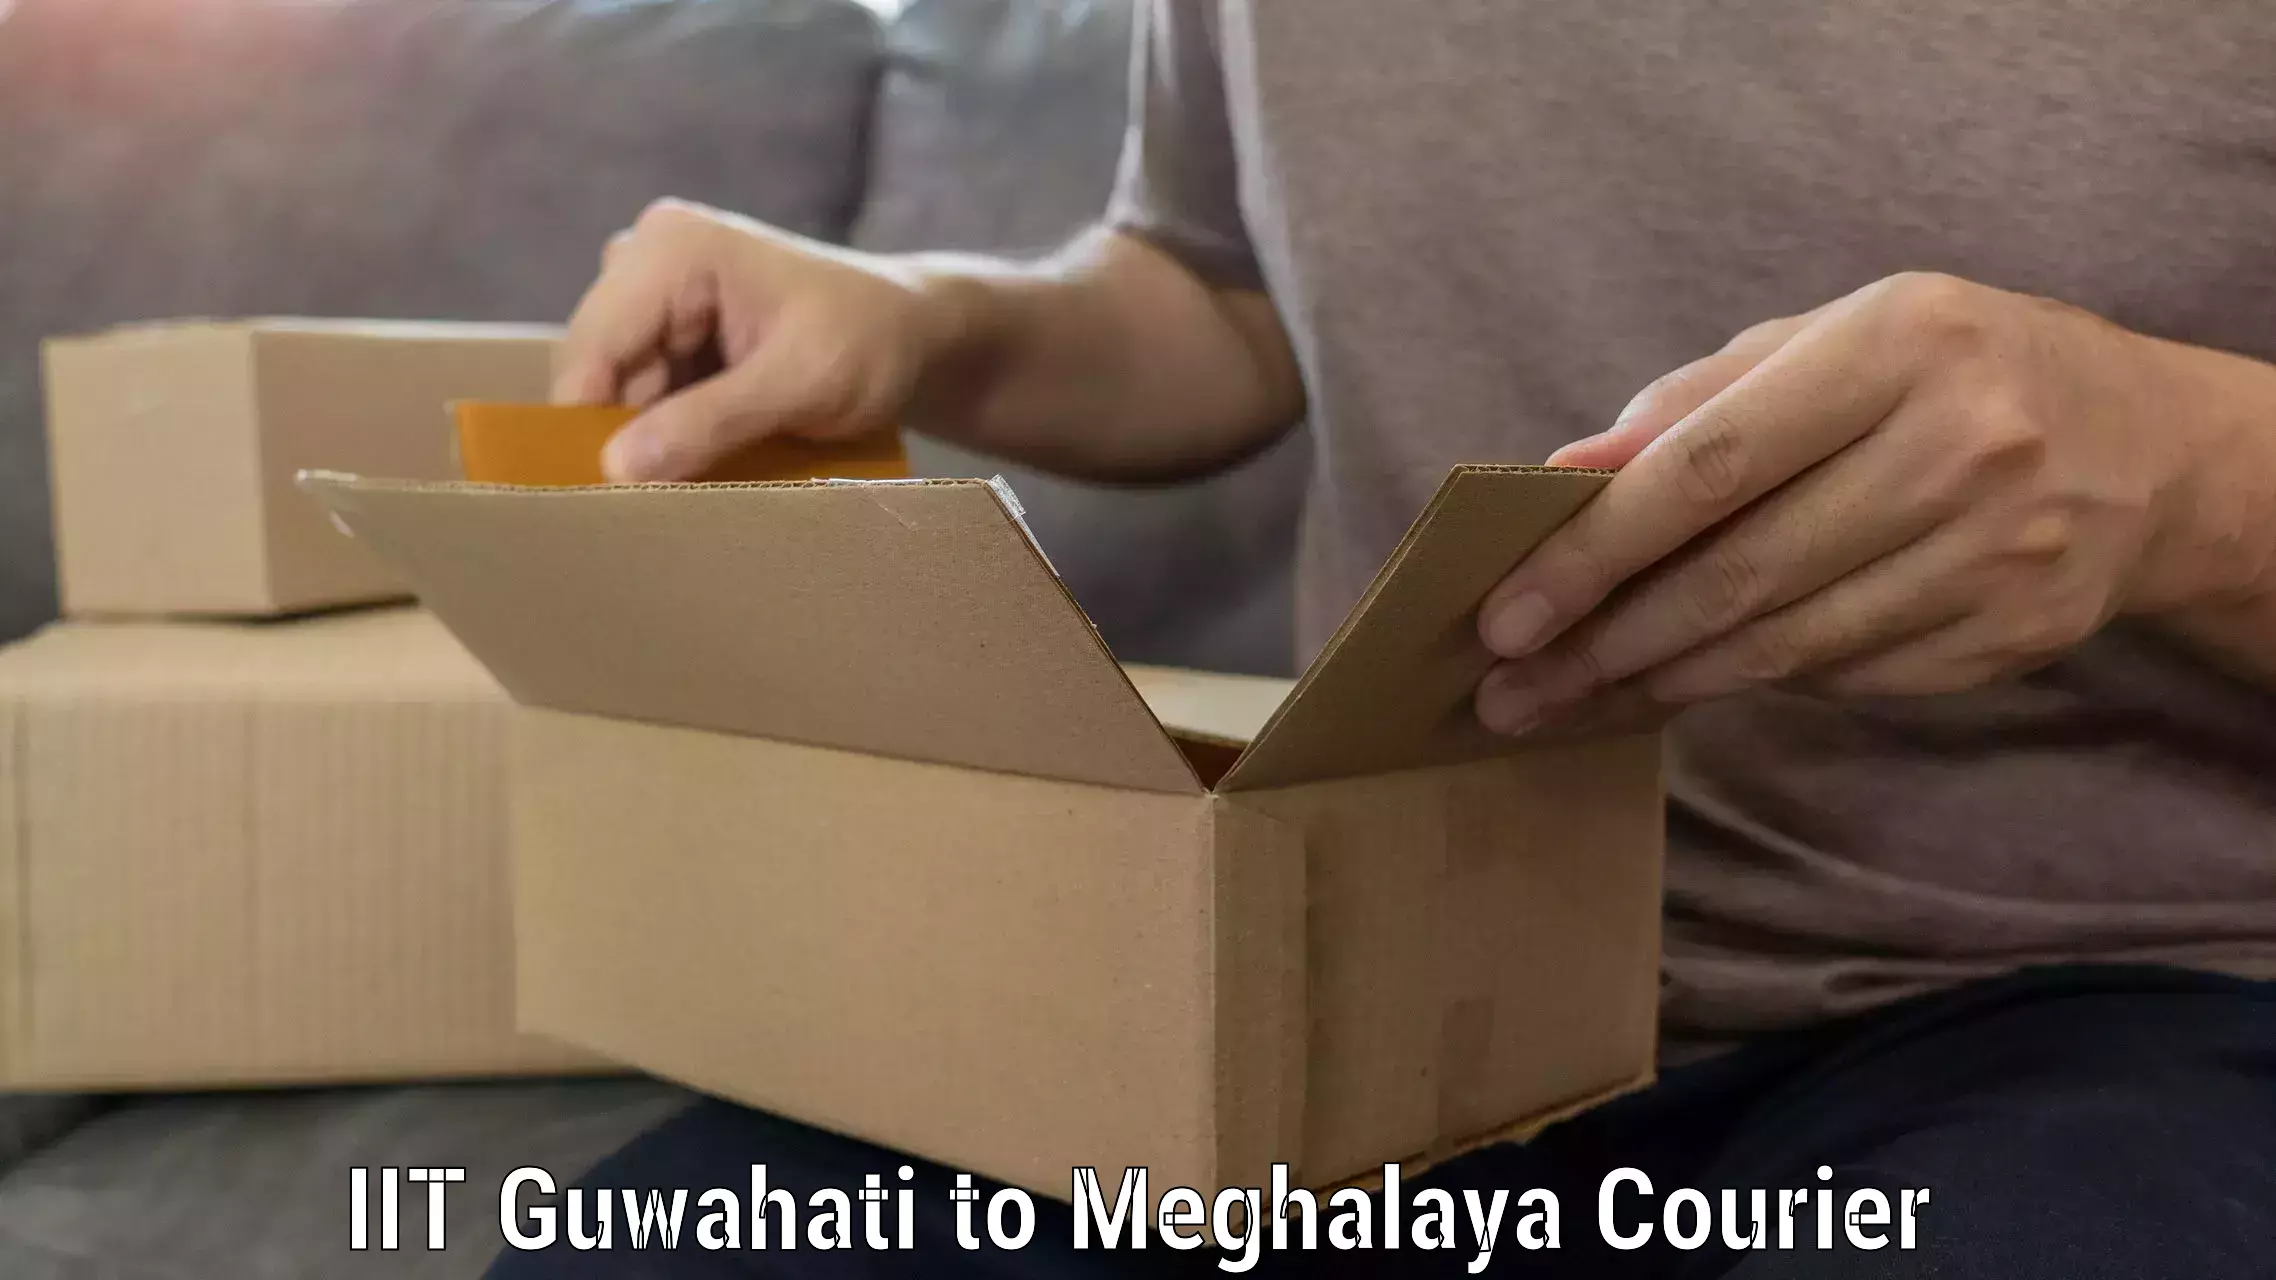 Moving service excellence IIT Guwahati to Meghalaya